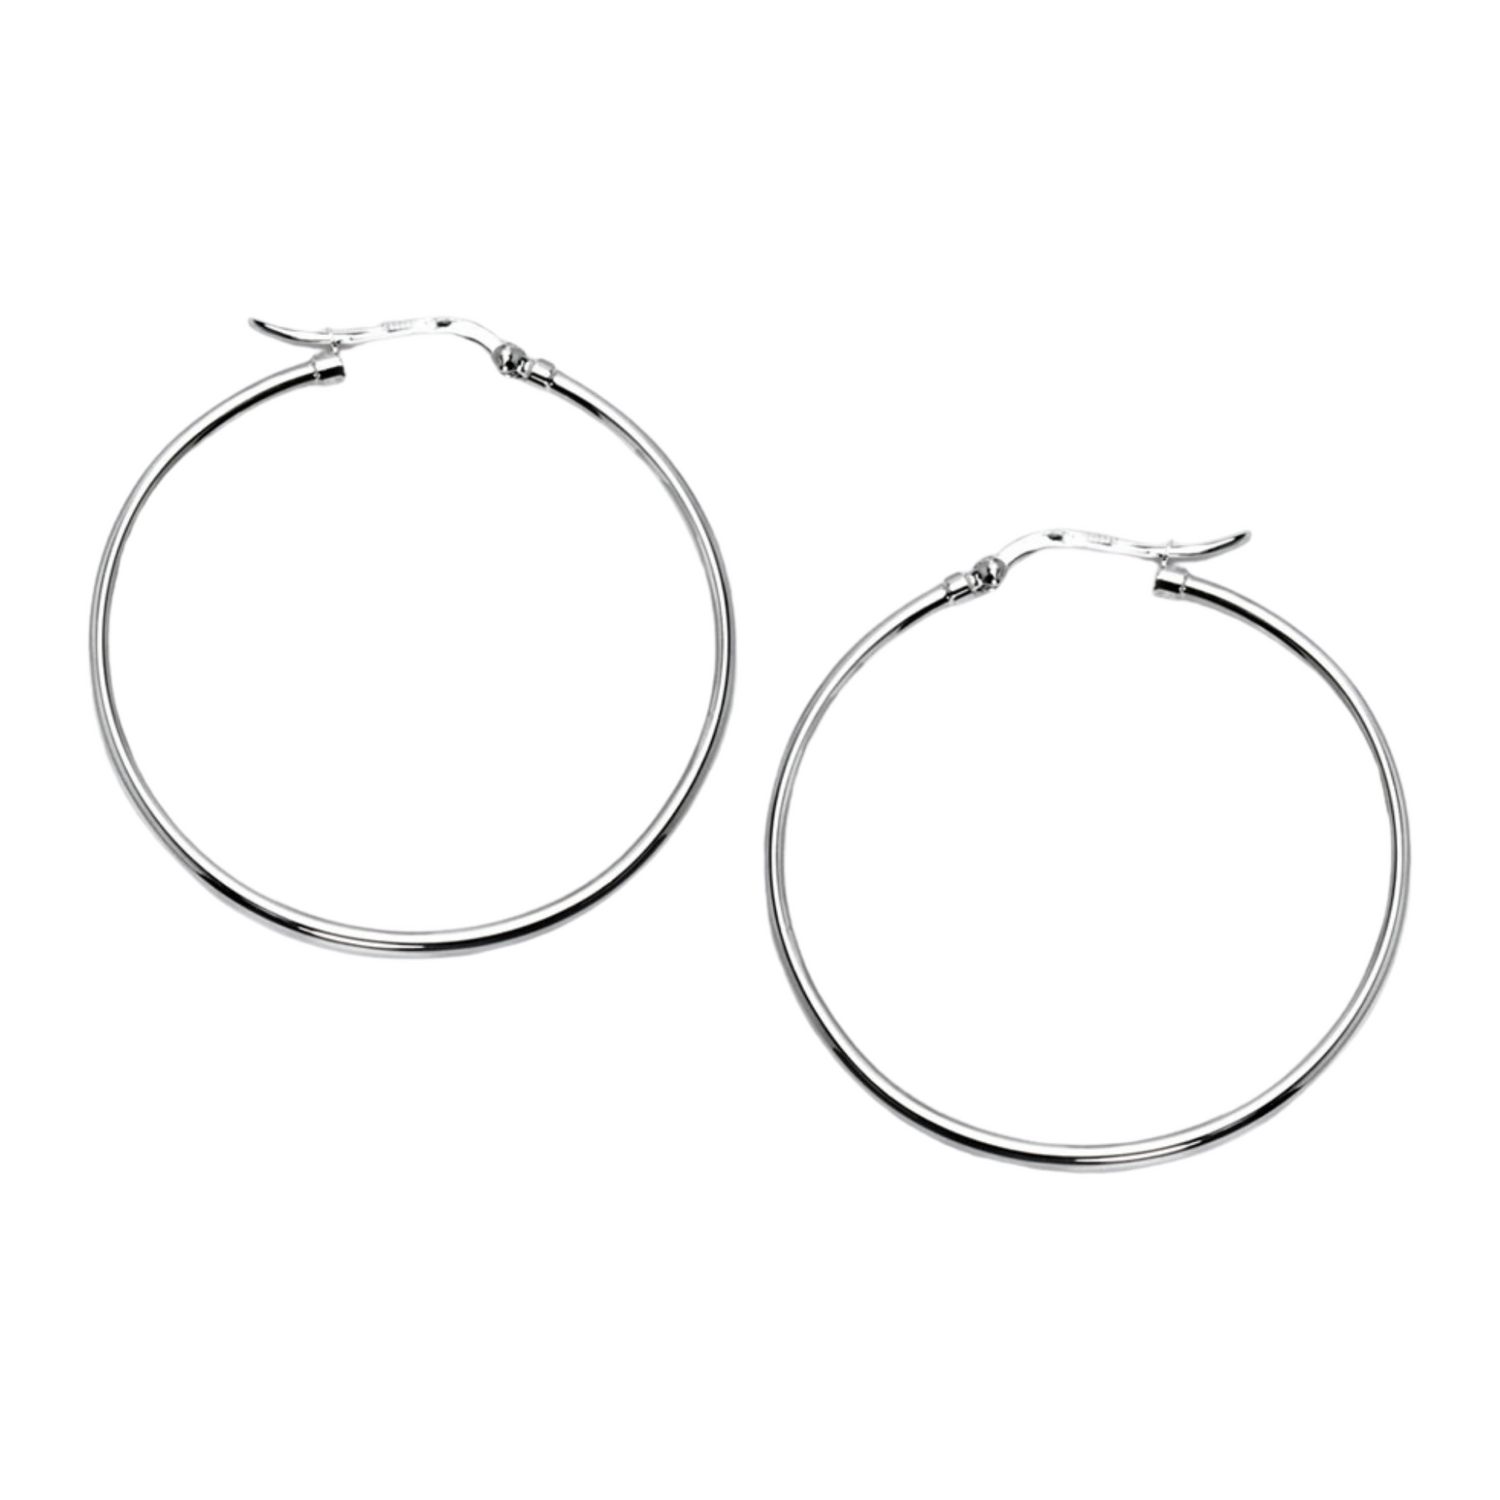 20mm Circumference Sterling Silver Hoops Earrings – Raf